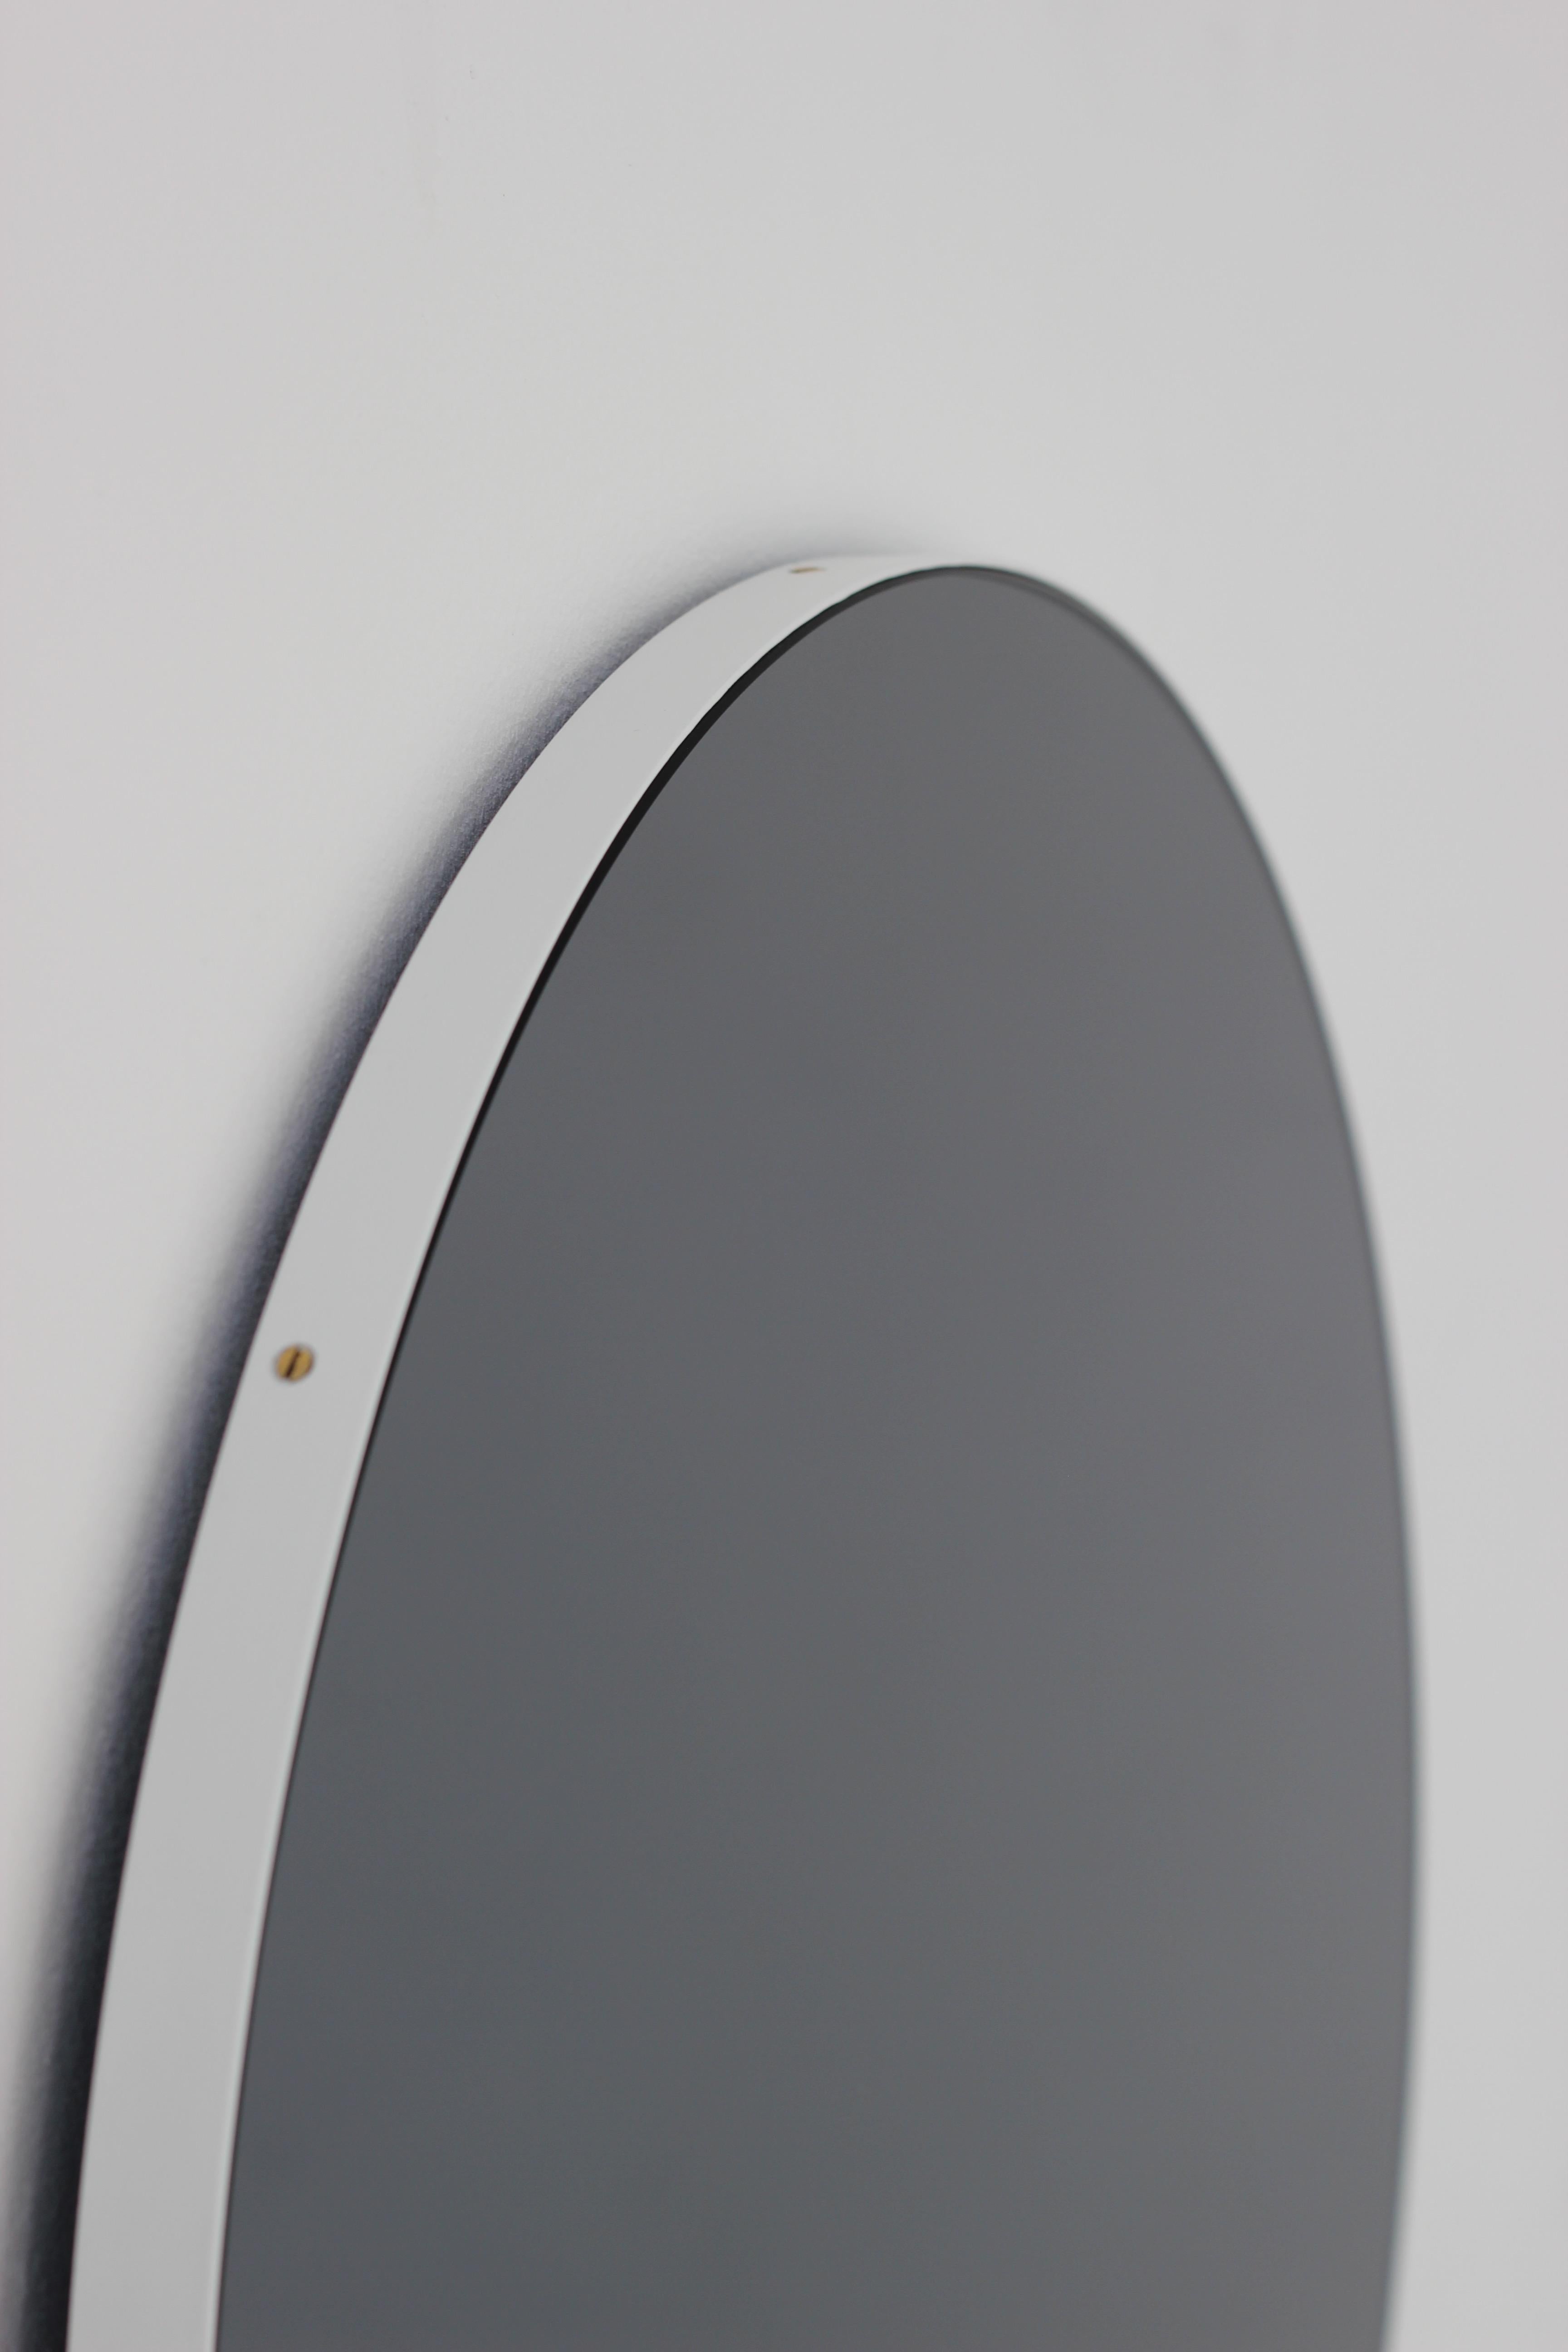 Aluminum Orbis Black Tinted Circular Minimalist Mirror with White Frame - Small